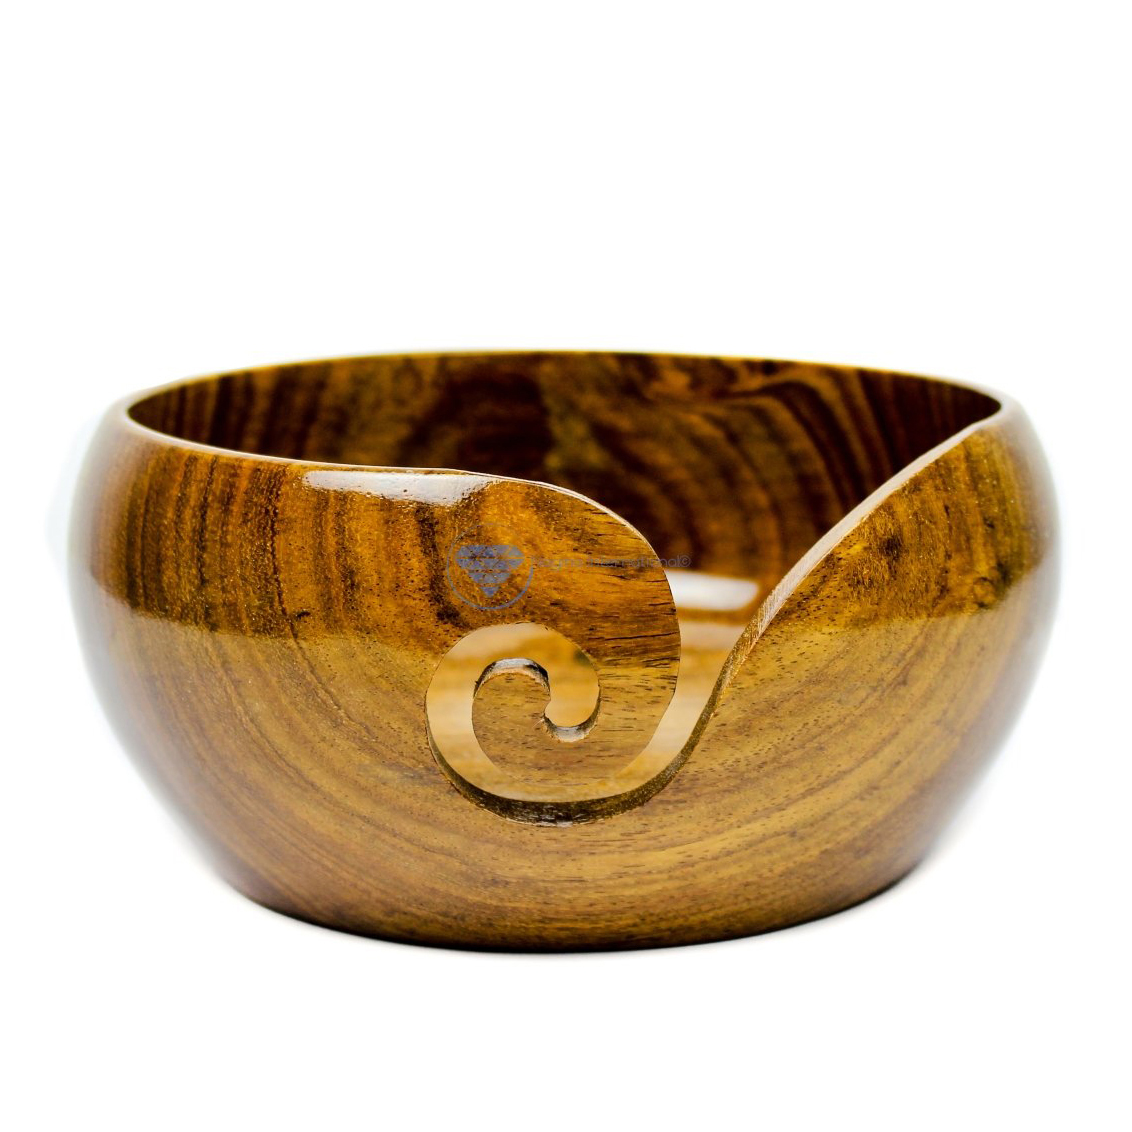 Premium Rosewood Crafted Wooden Portable Yarn Bowl | Knitting Bowls | Crochet Holder | Nagina International